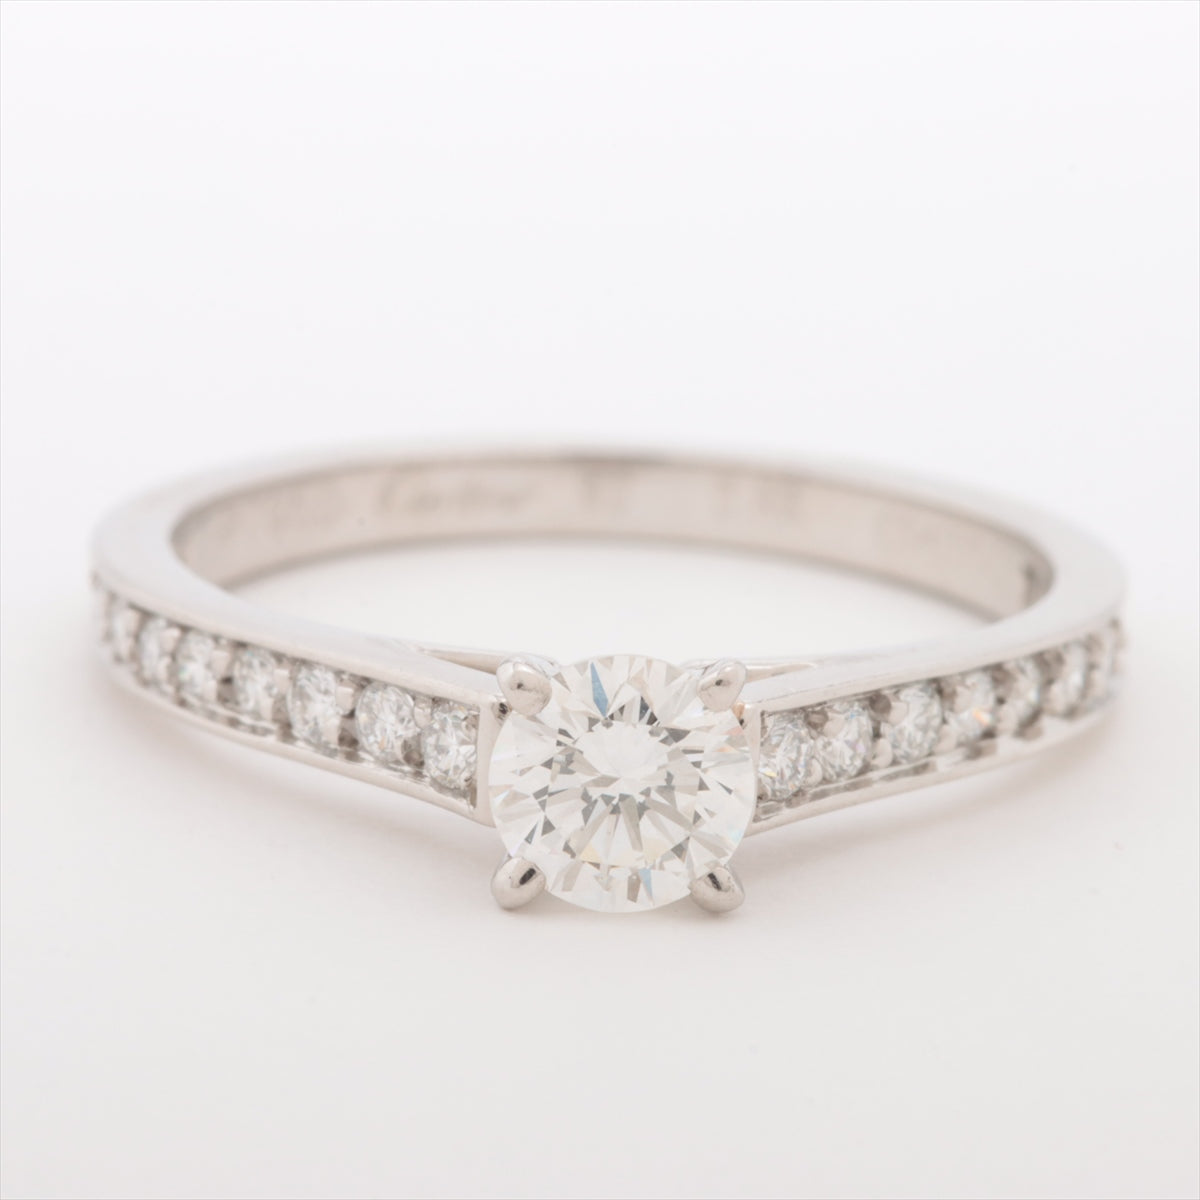 Cartier Solitaire 1895 Heart Eternity diamond rings Pt950 3.0g 0.36